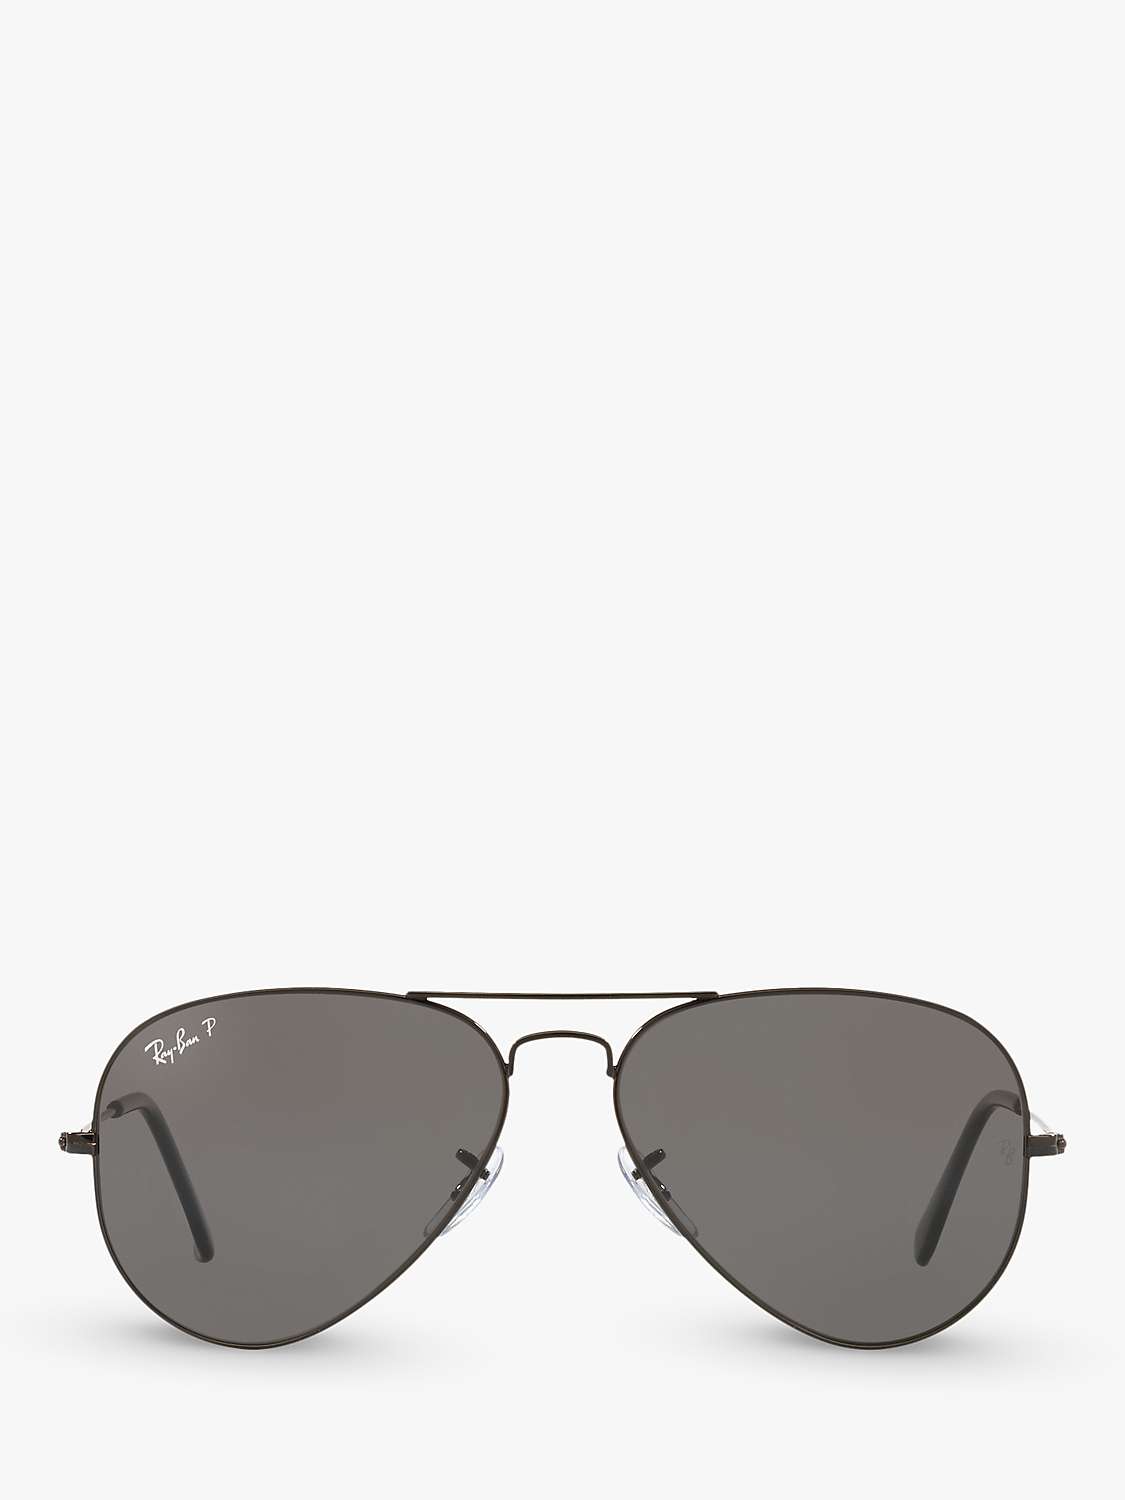 Buy Ray-Ban RB3025 Unisex Polarised Aviator Sunglasses, Black/Grey Online at johnlewis.com